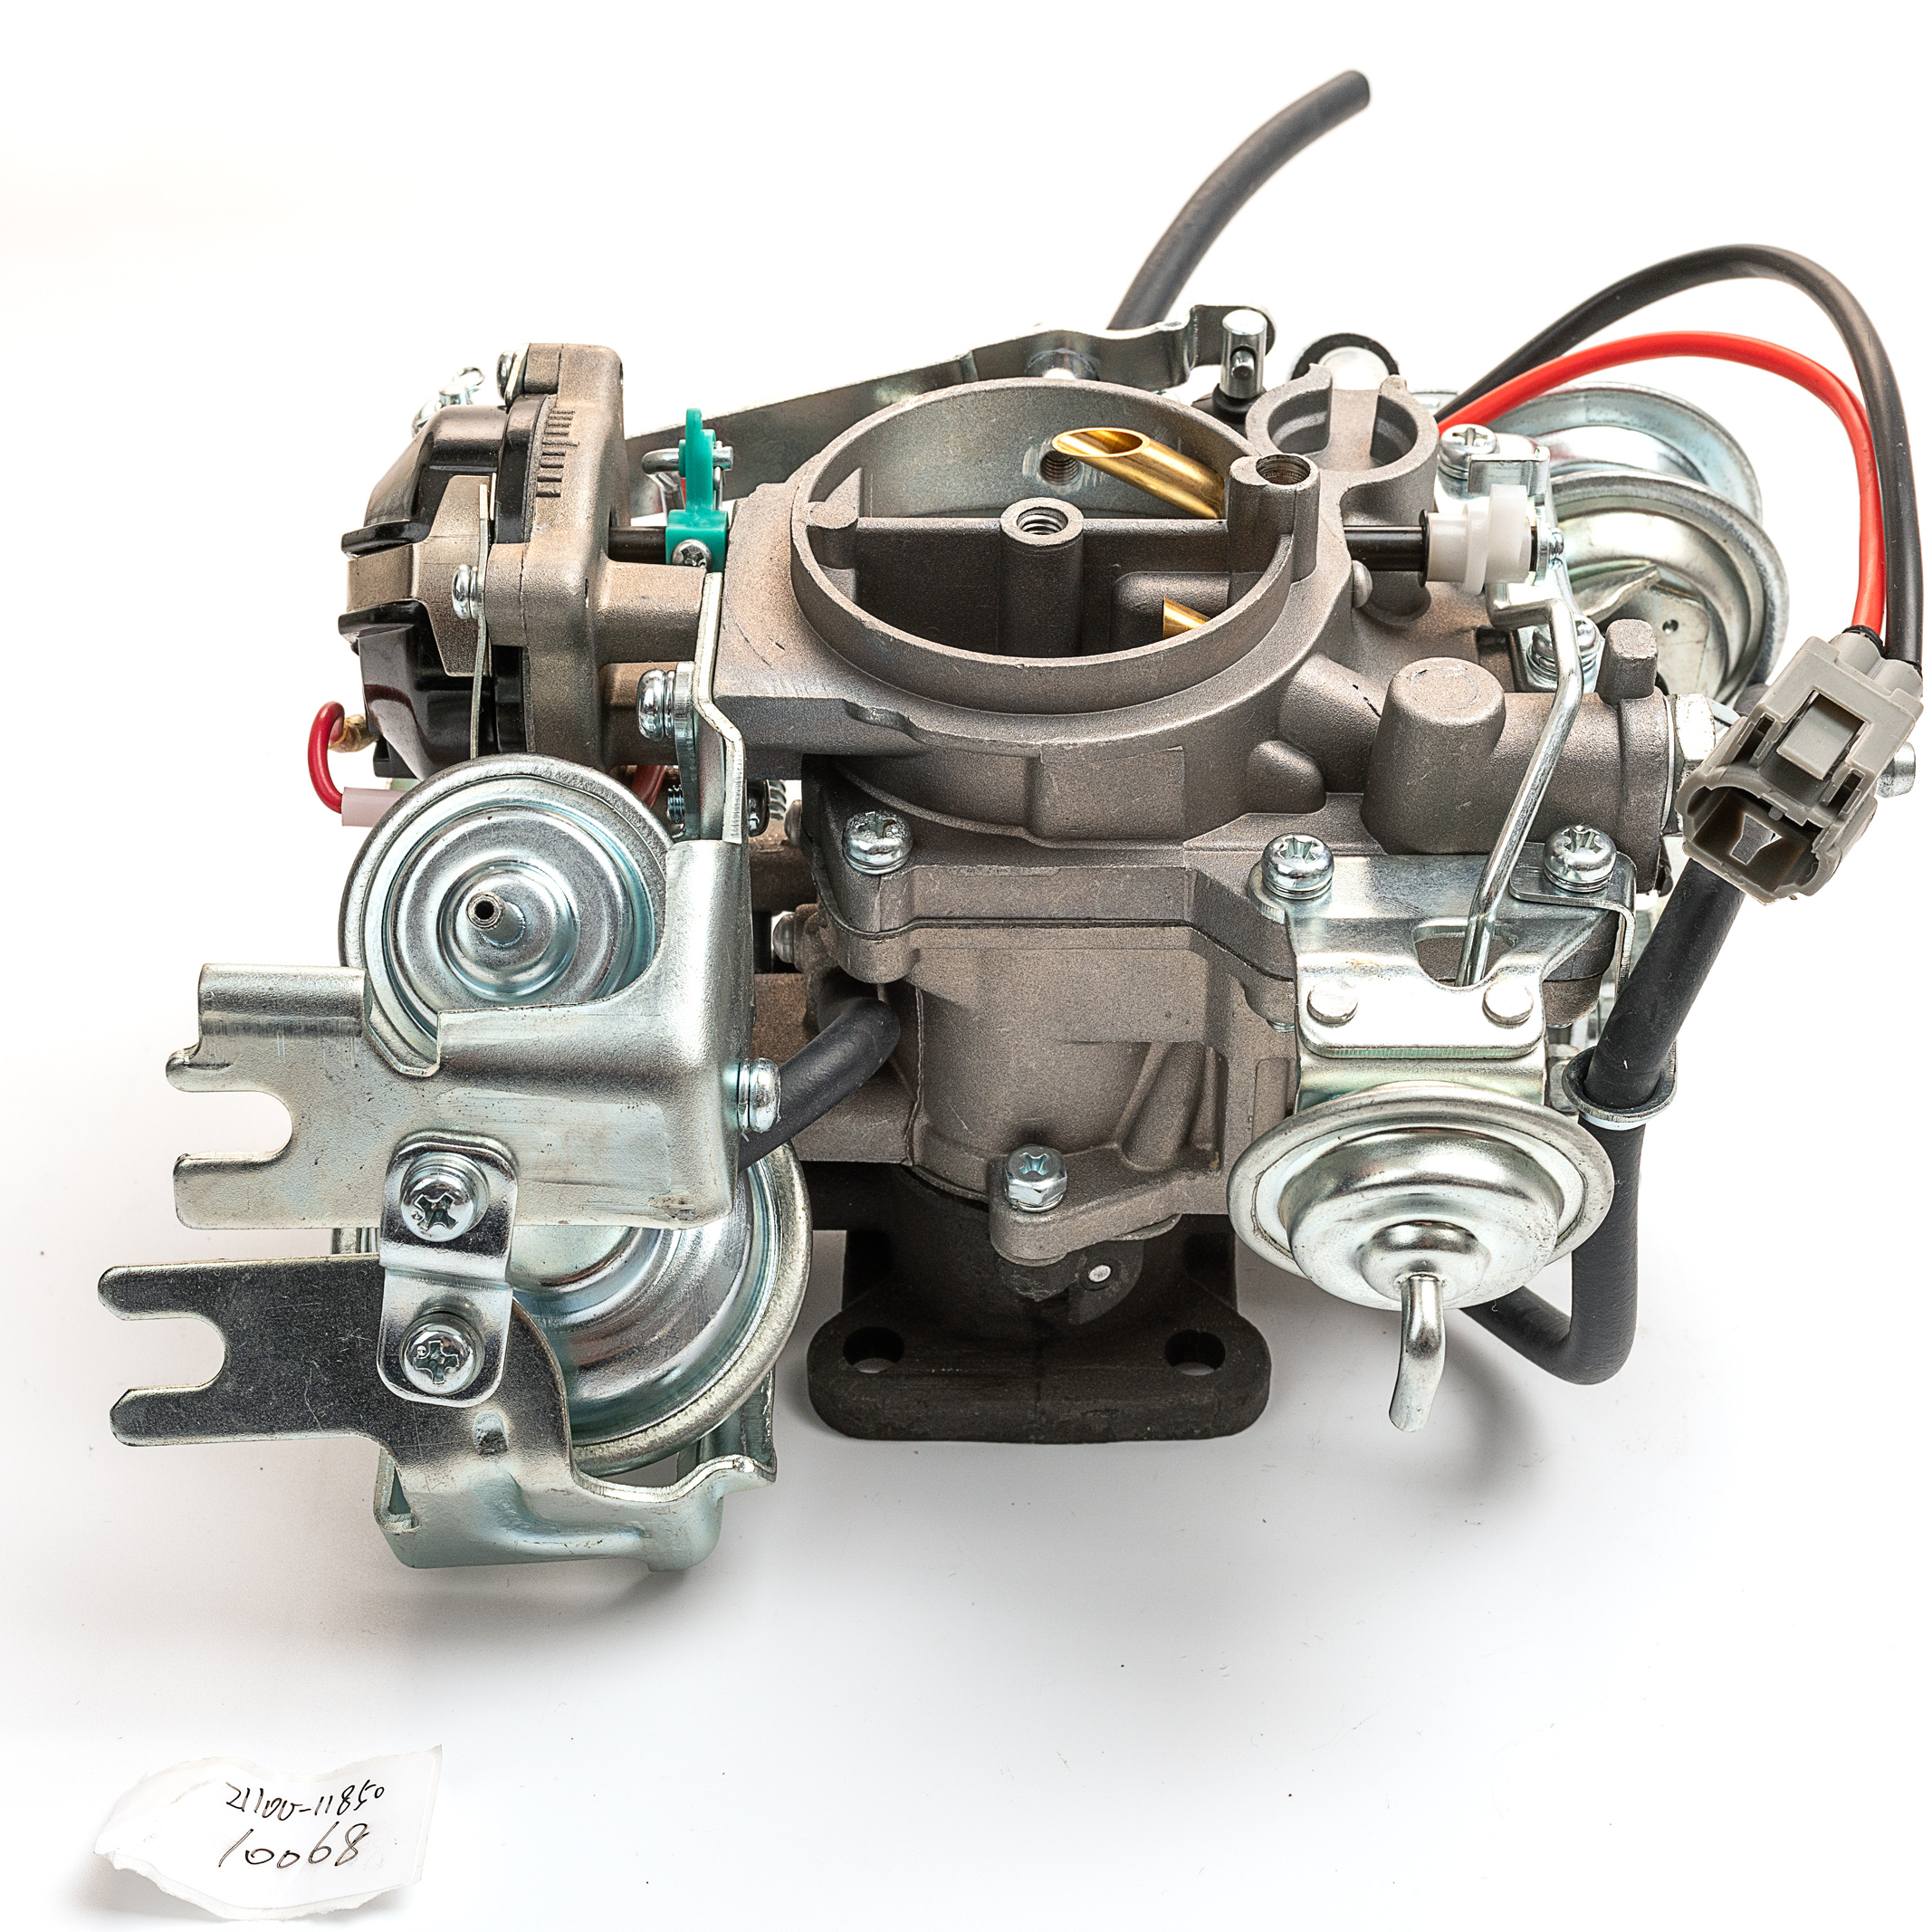 Carburetor supplier | Carburetor definition